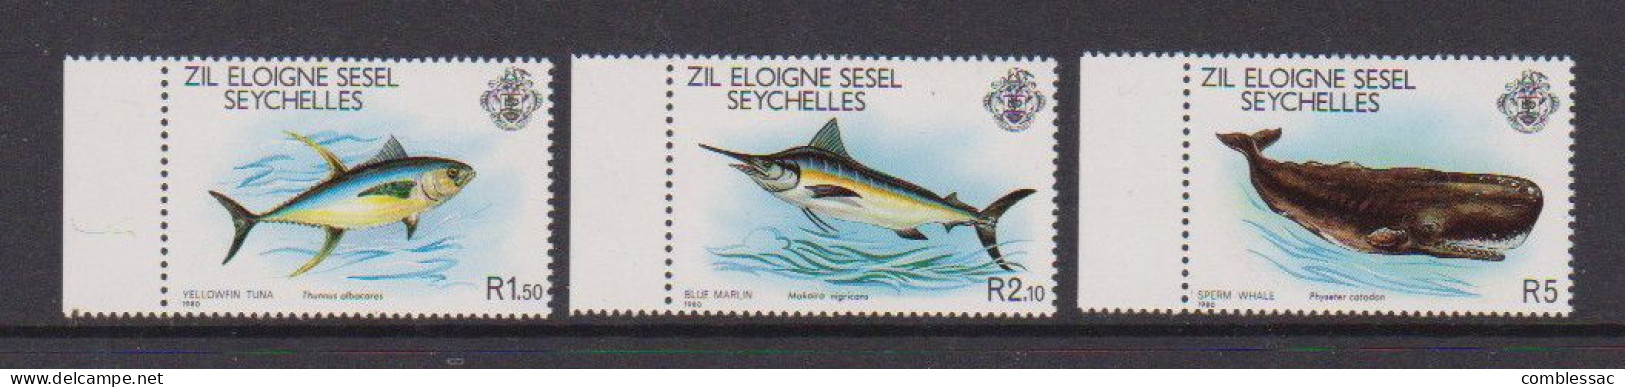 SEYCHELLES  ZIL ELWAGNE  SESEL    1980    Marine  Life    Set  Of  3   MNH - Seychelles (1976-...)